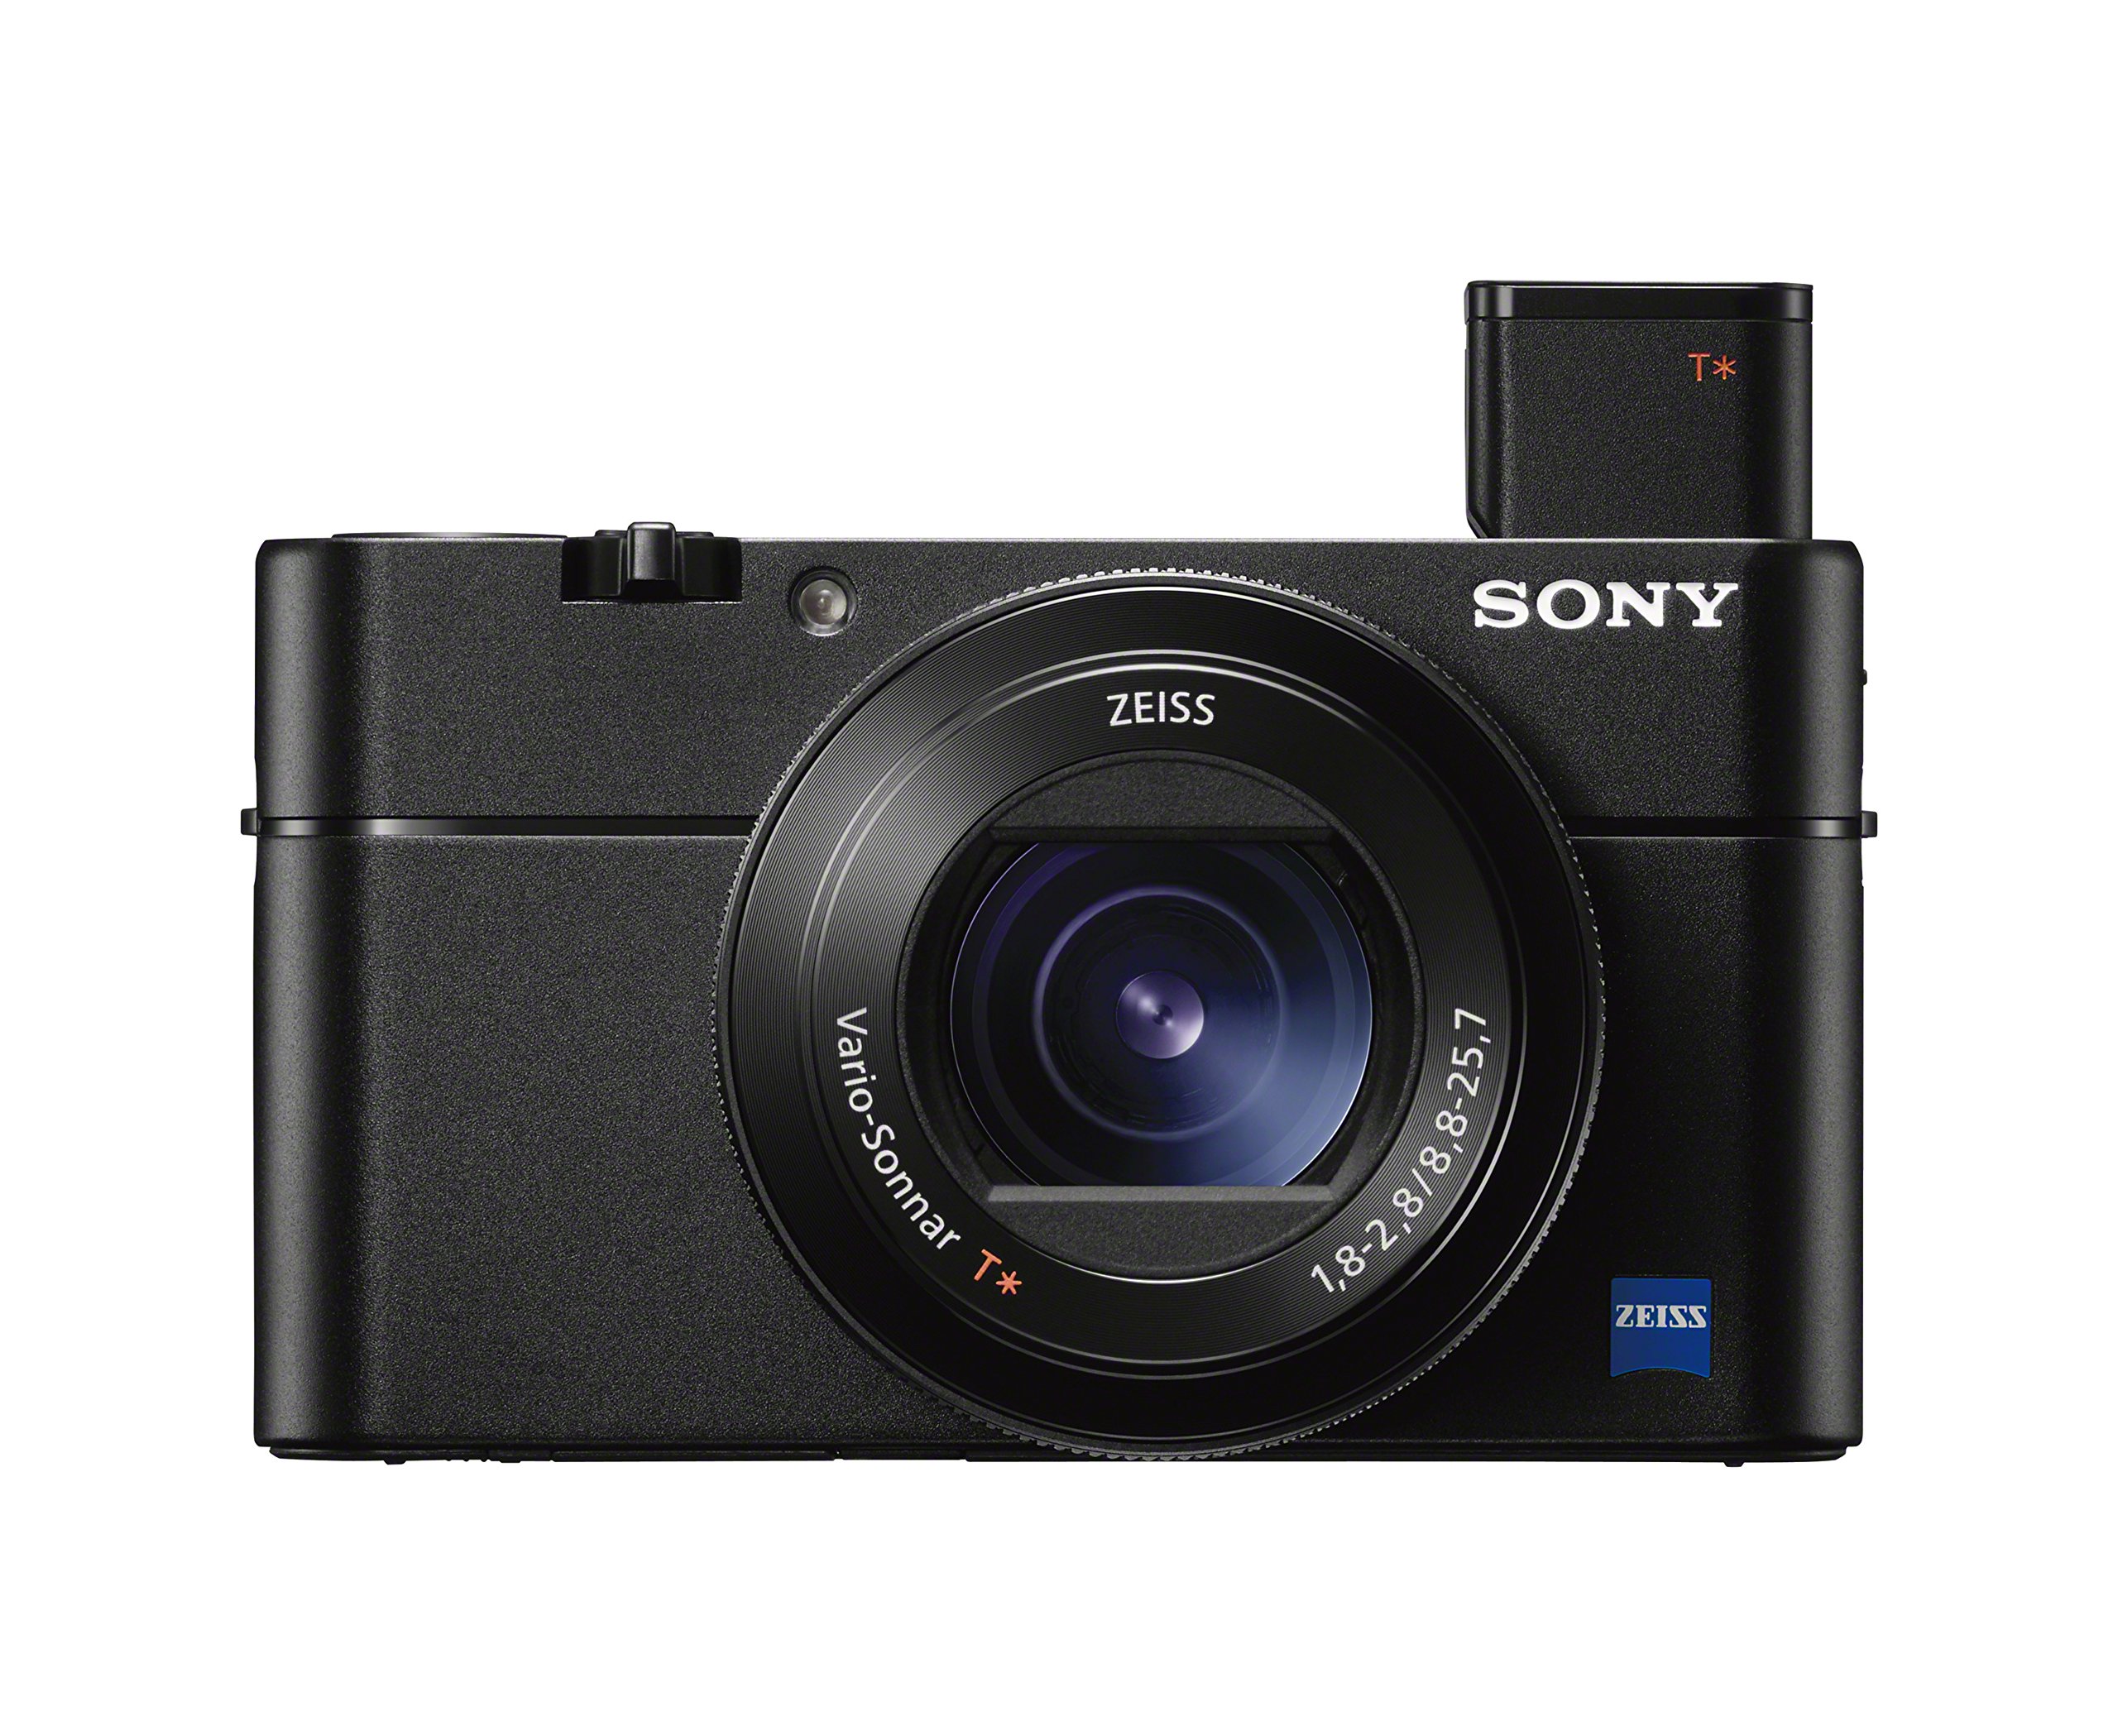 Sony RX100VA (NEWEST VERSION) 20.1MP Digital Camera: RX100 V Cyber-shot Camera with Hybrid 0.05 AF, 24fps Shooting Speed & Wide 315 Phase Detection - 3” OLED Viewfinder & 24-70mm Zoom Lens - Wi-Fi